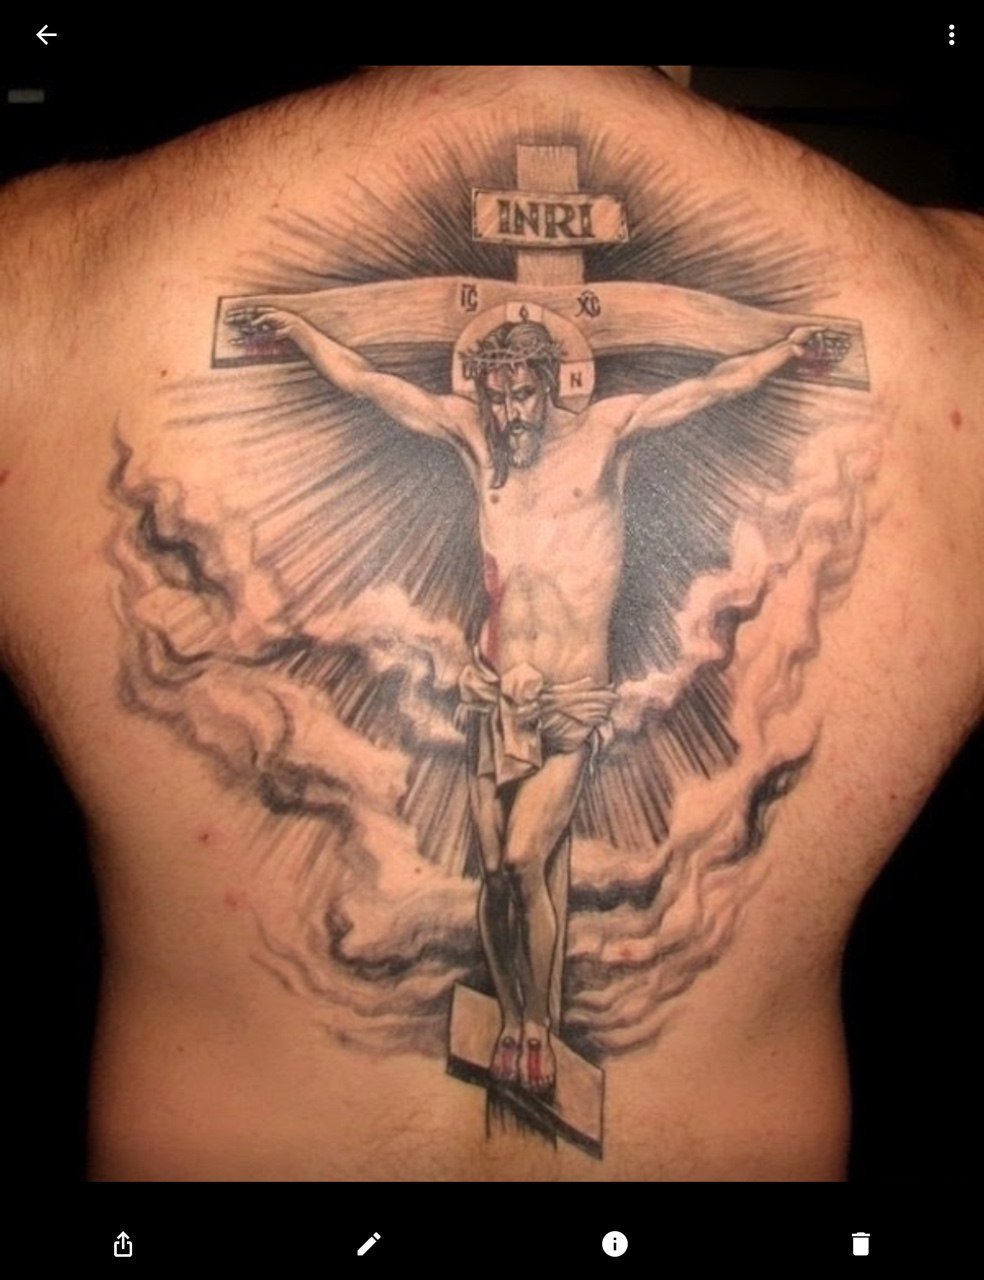 татуировки для мужчин крест на груди фото 93